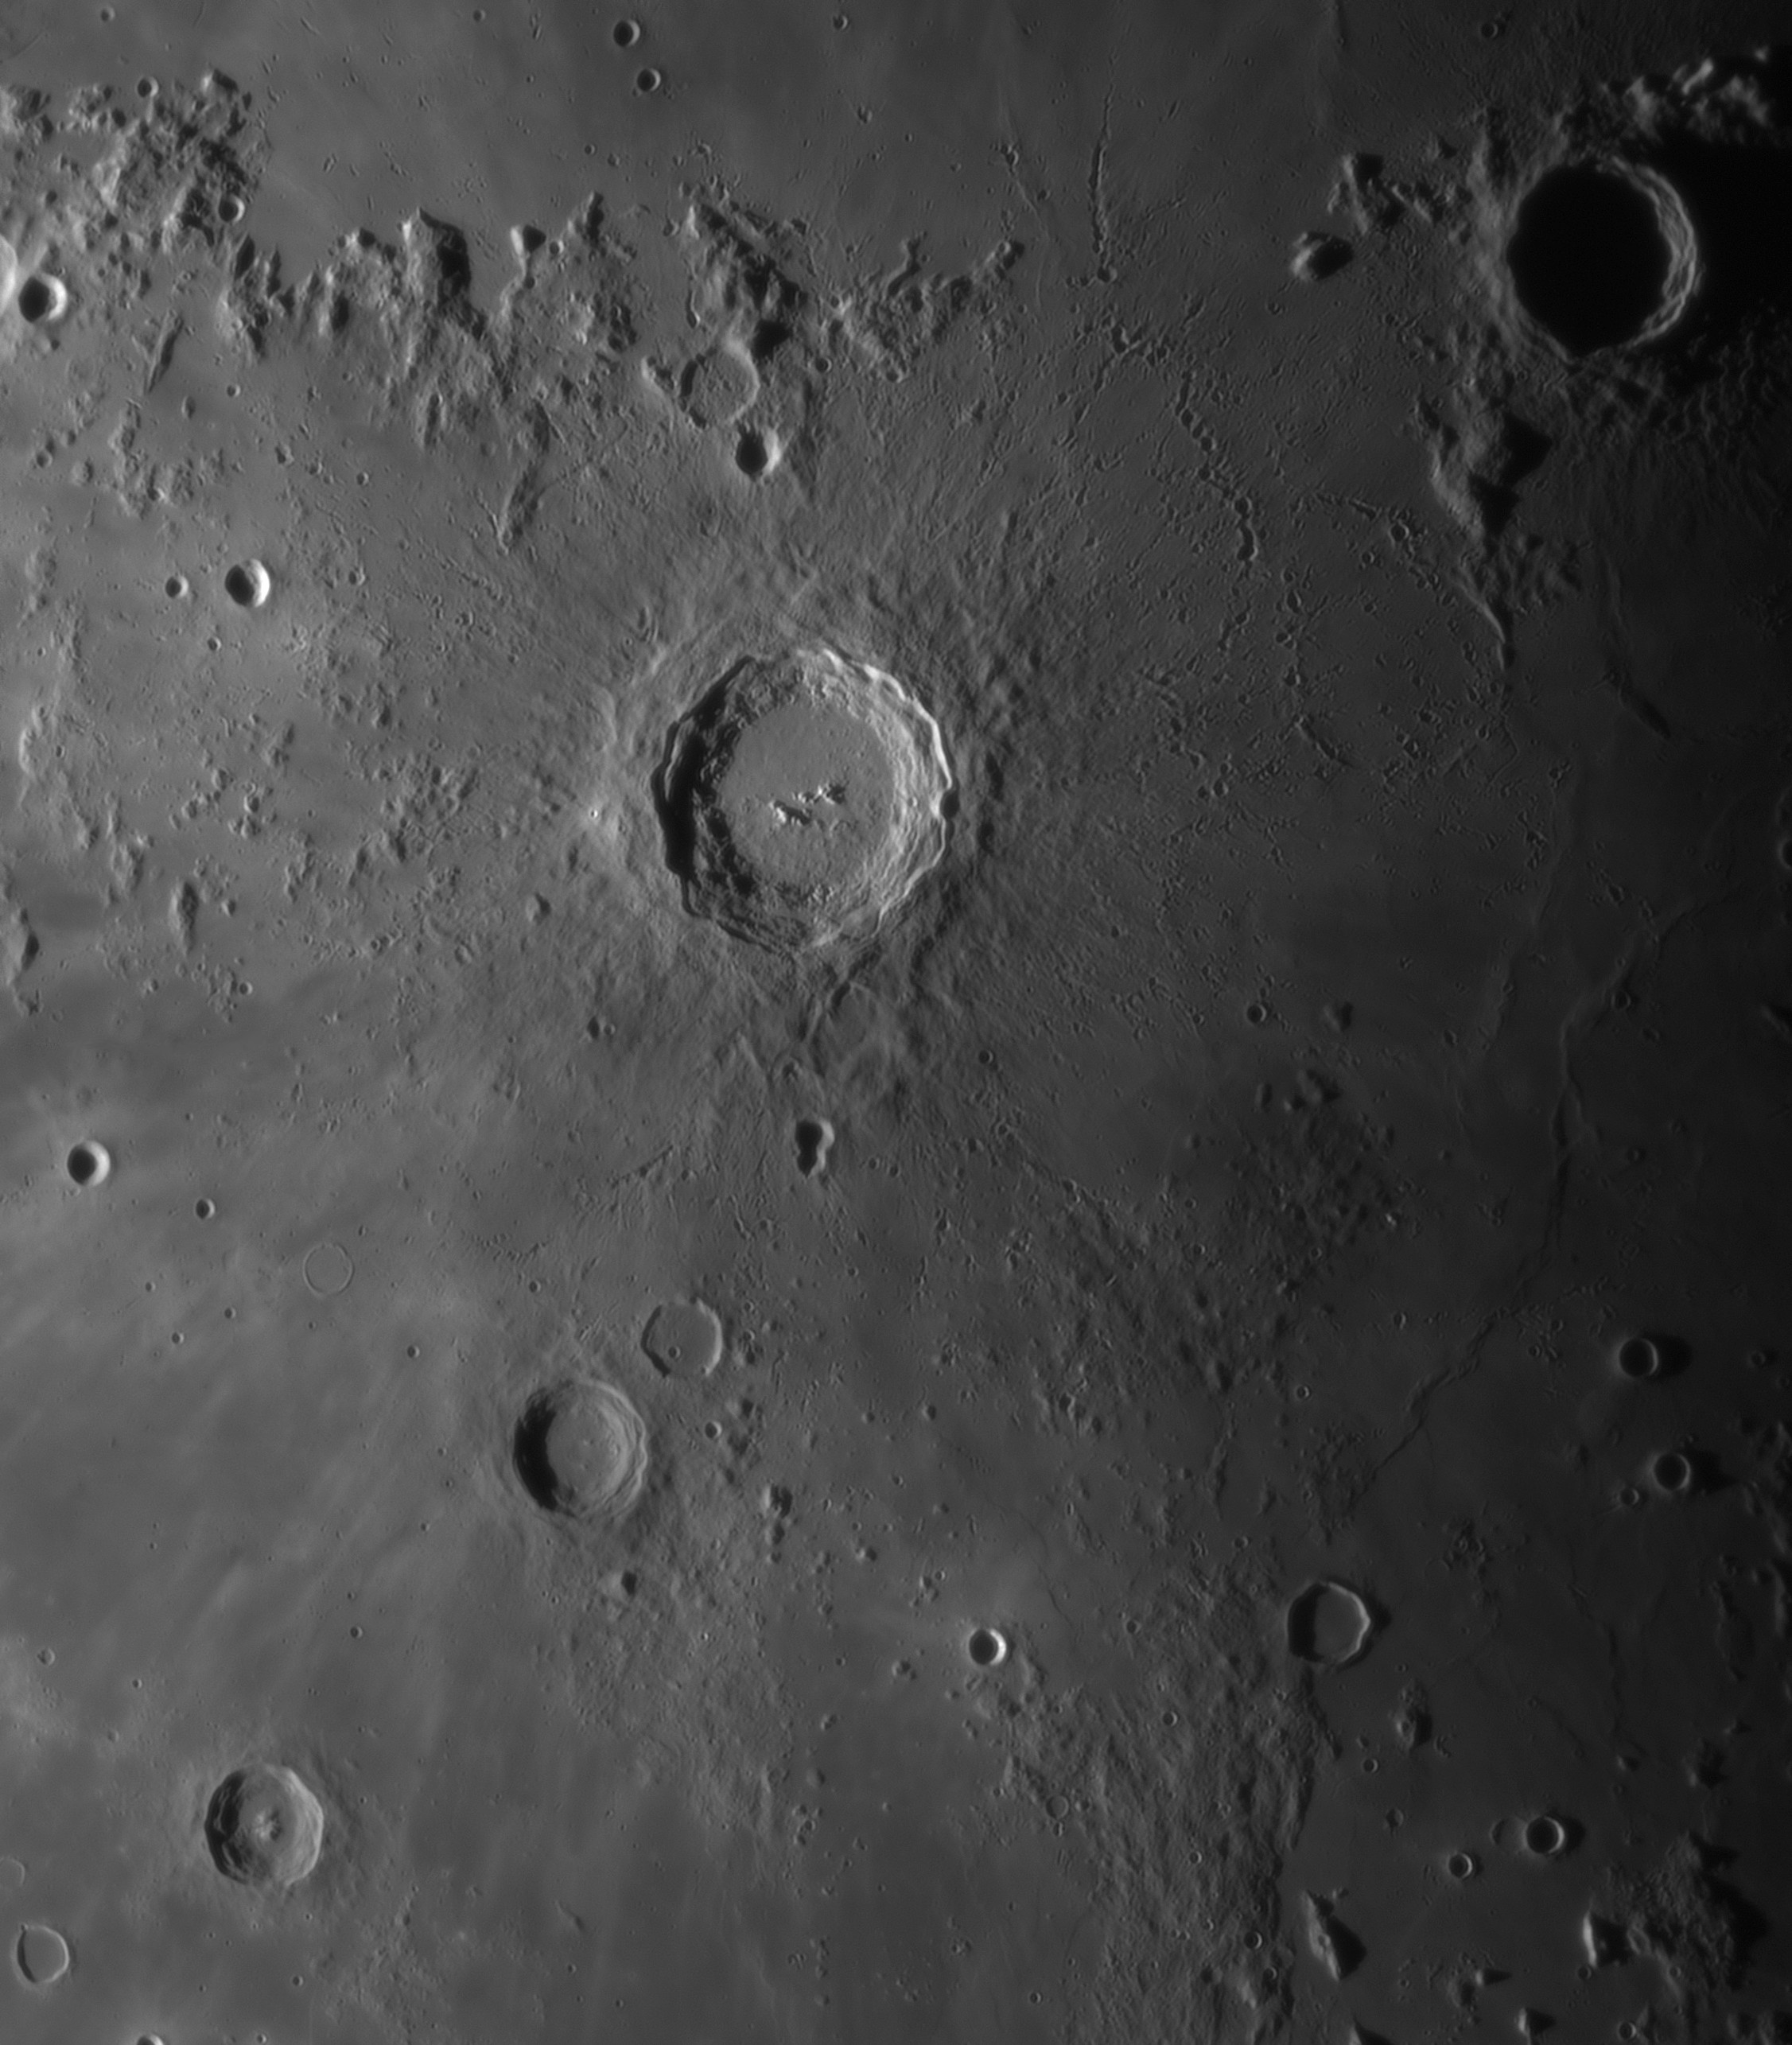 Copernicus.jpg